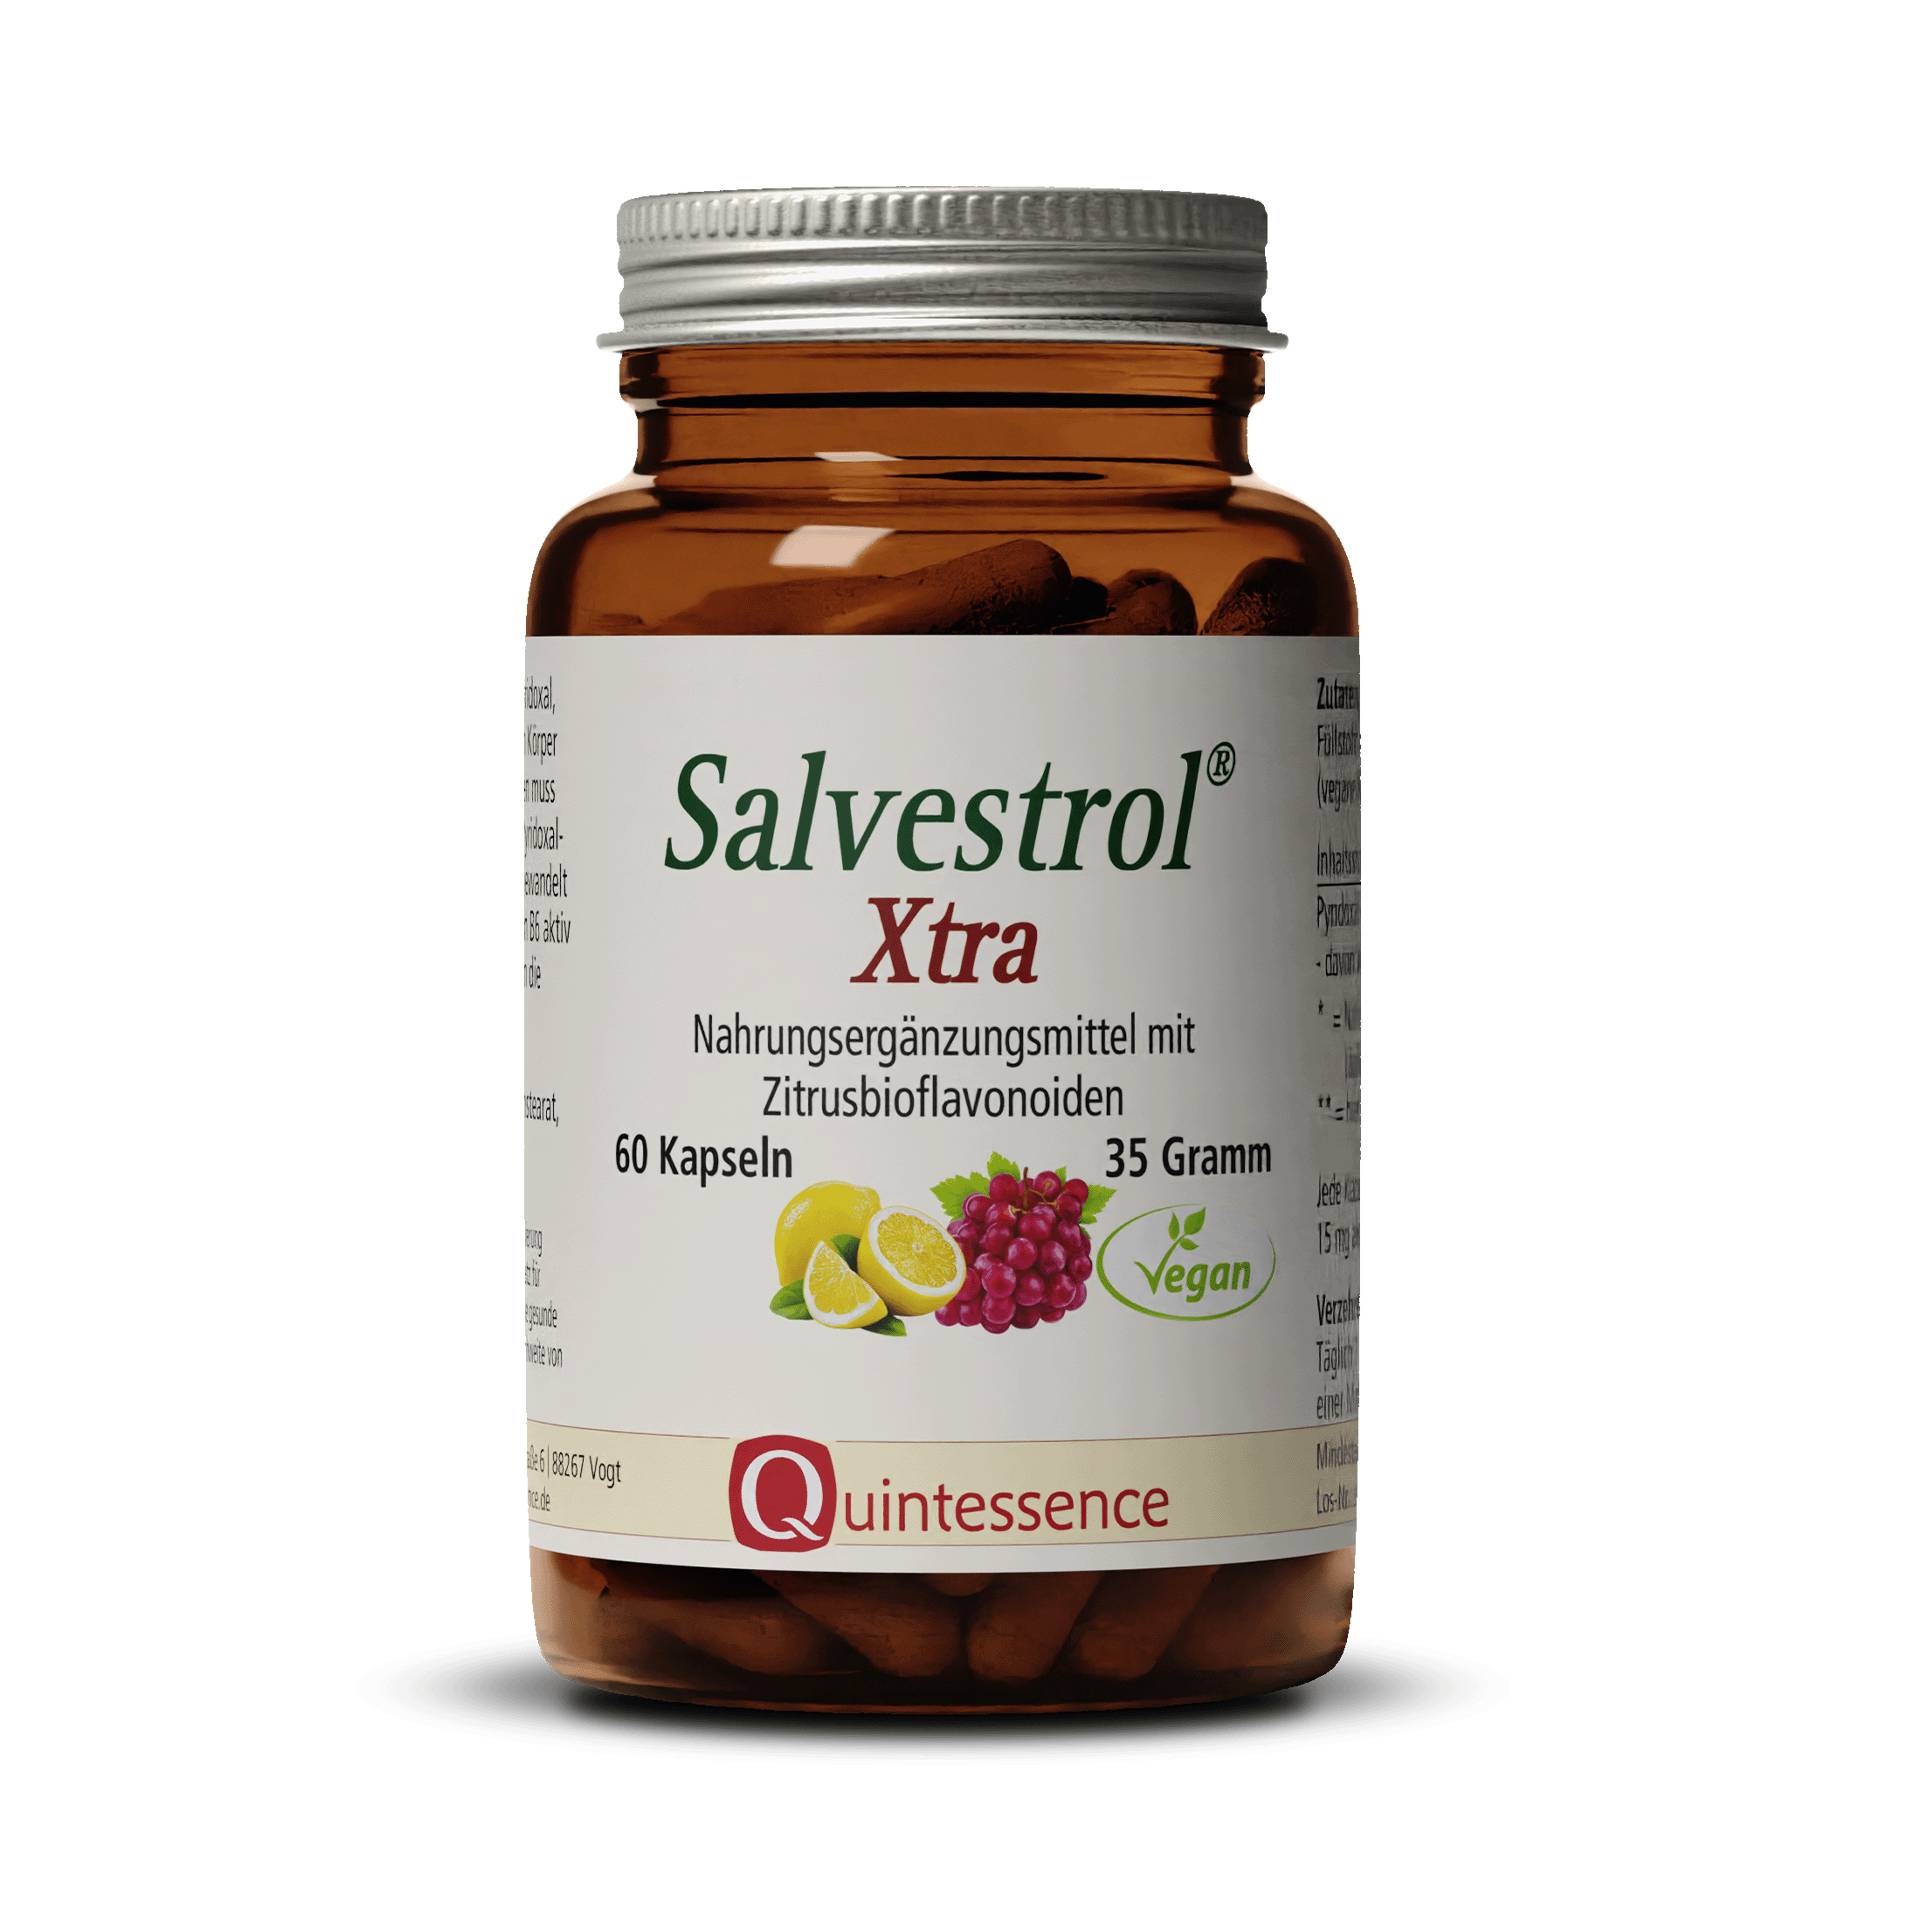 Salvestrol Xtra 60 Kapseln - 2.000 Salvestrolpunkte pro Kapsel - Hochdosierter Fruchtkomplex - Vegan - Quintessence von Quintessence